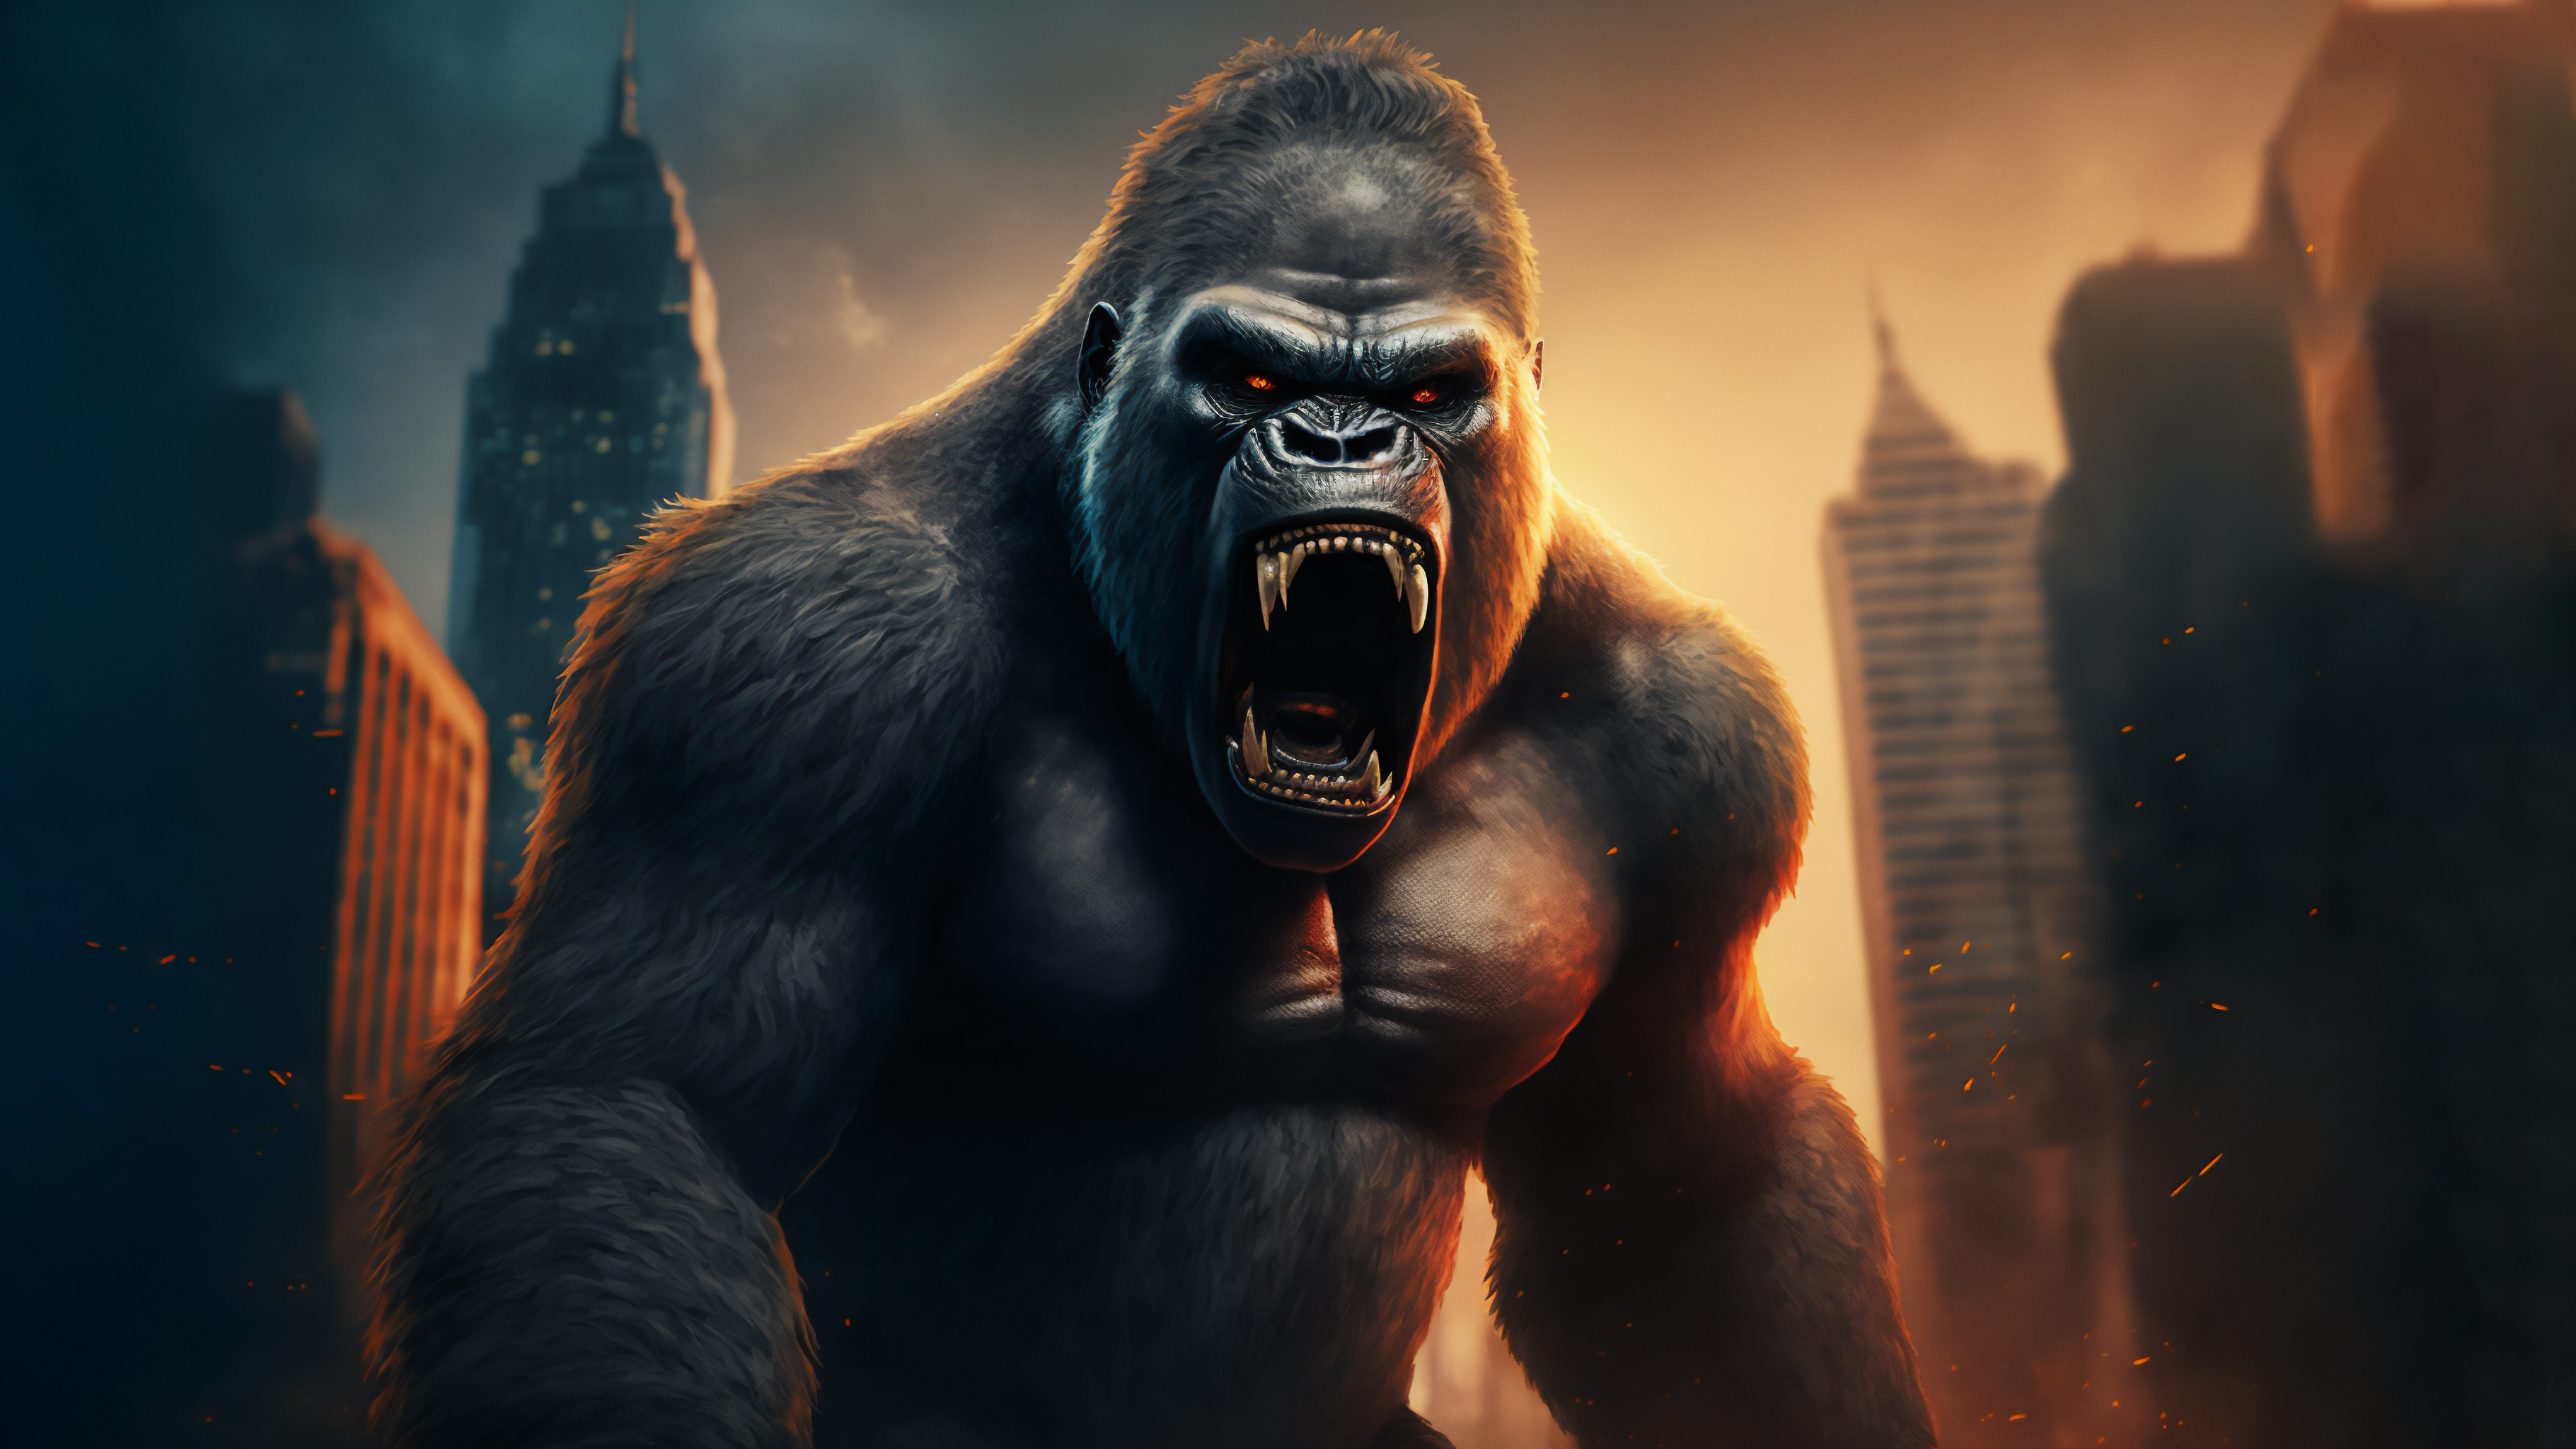 Ai Art Illustration King Kong Angry City Building 3641x2048